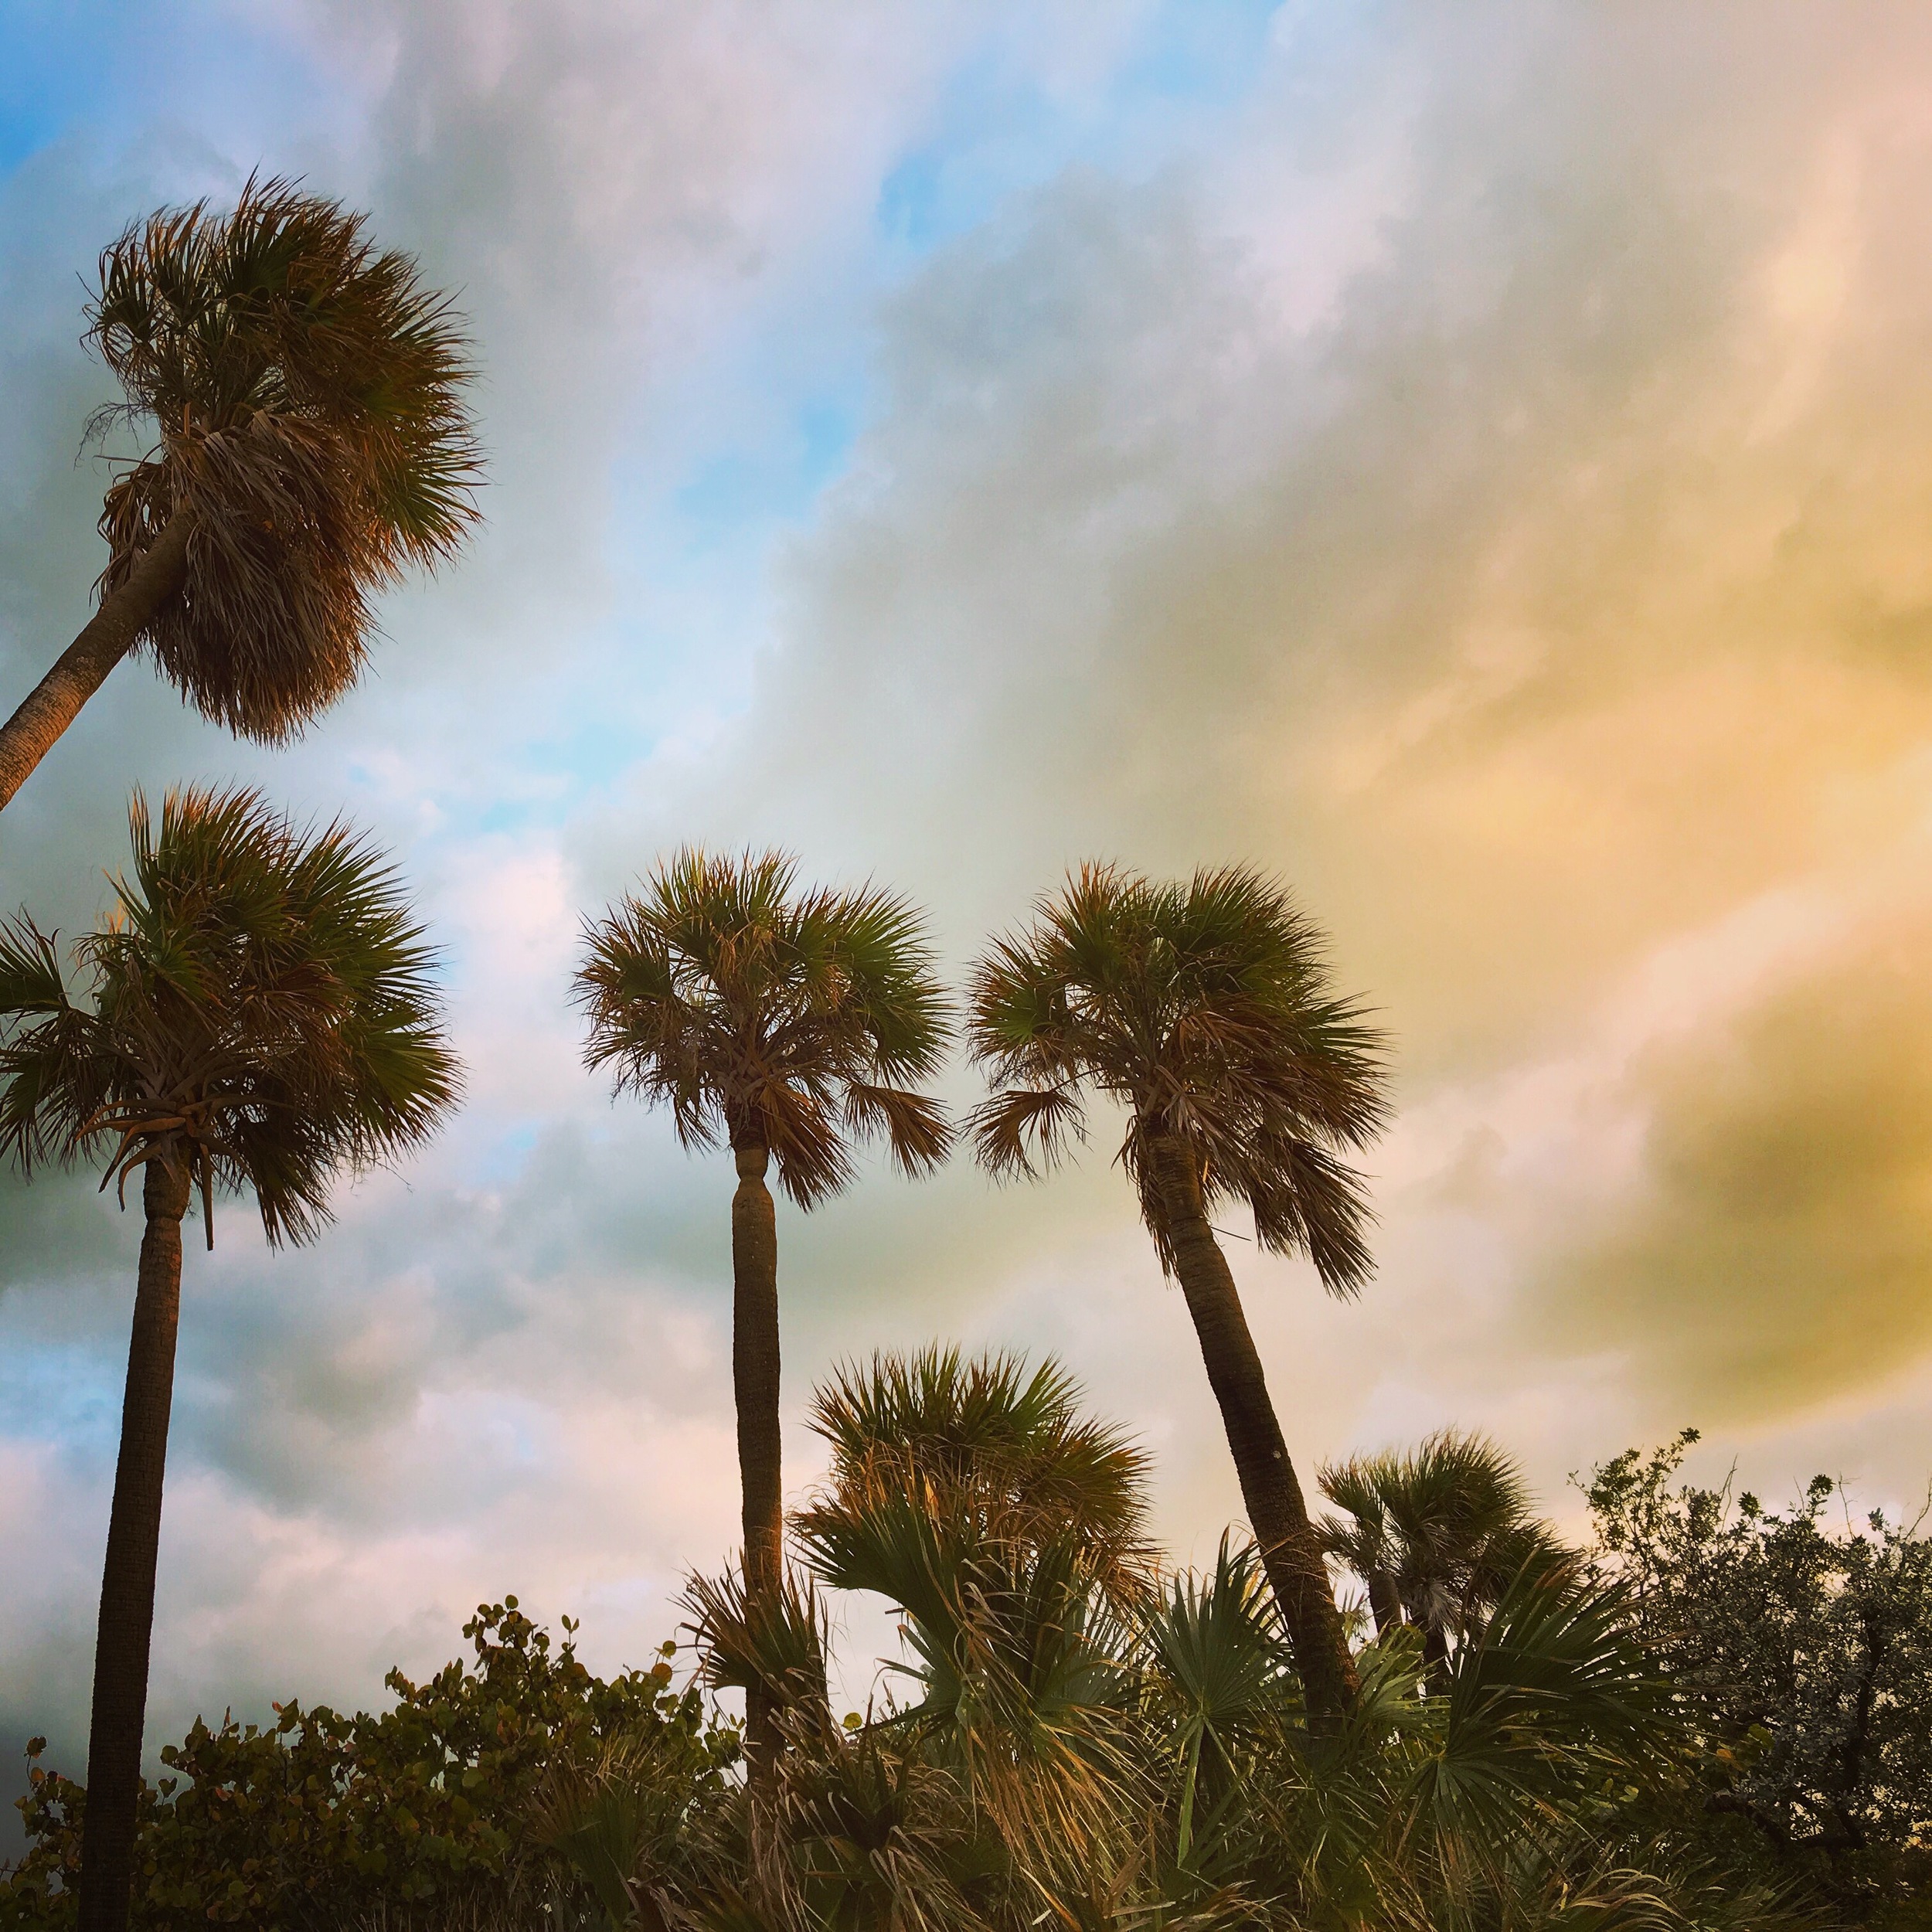 Daytripper365-Palm Trees in South Beach.JPG